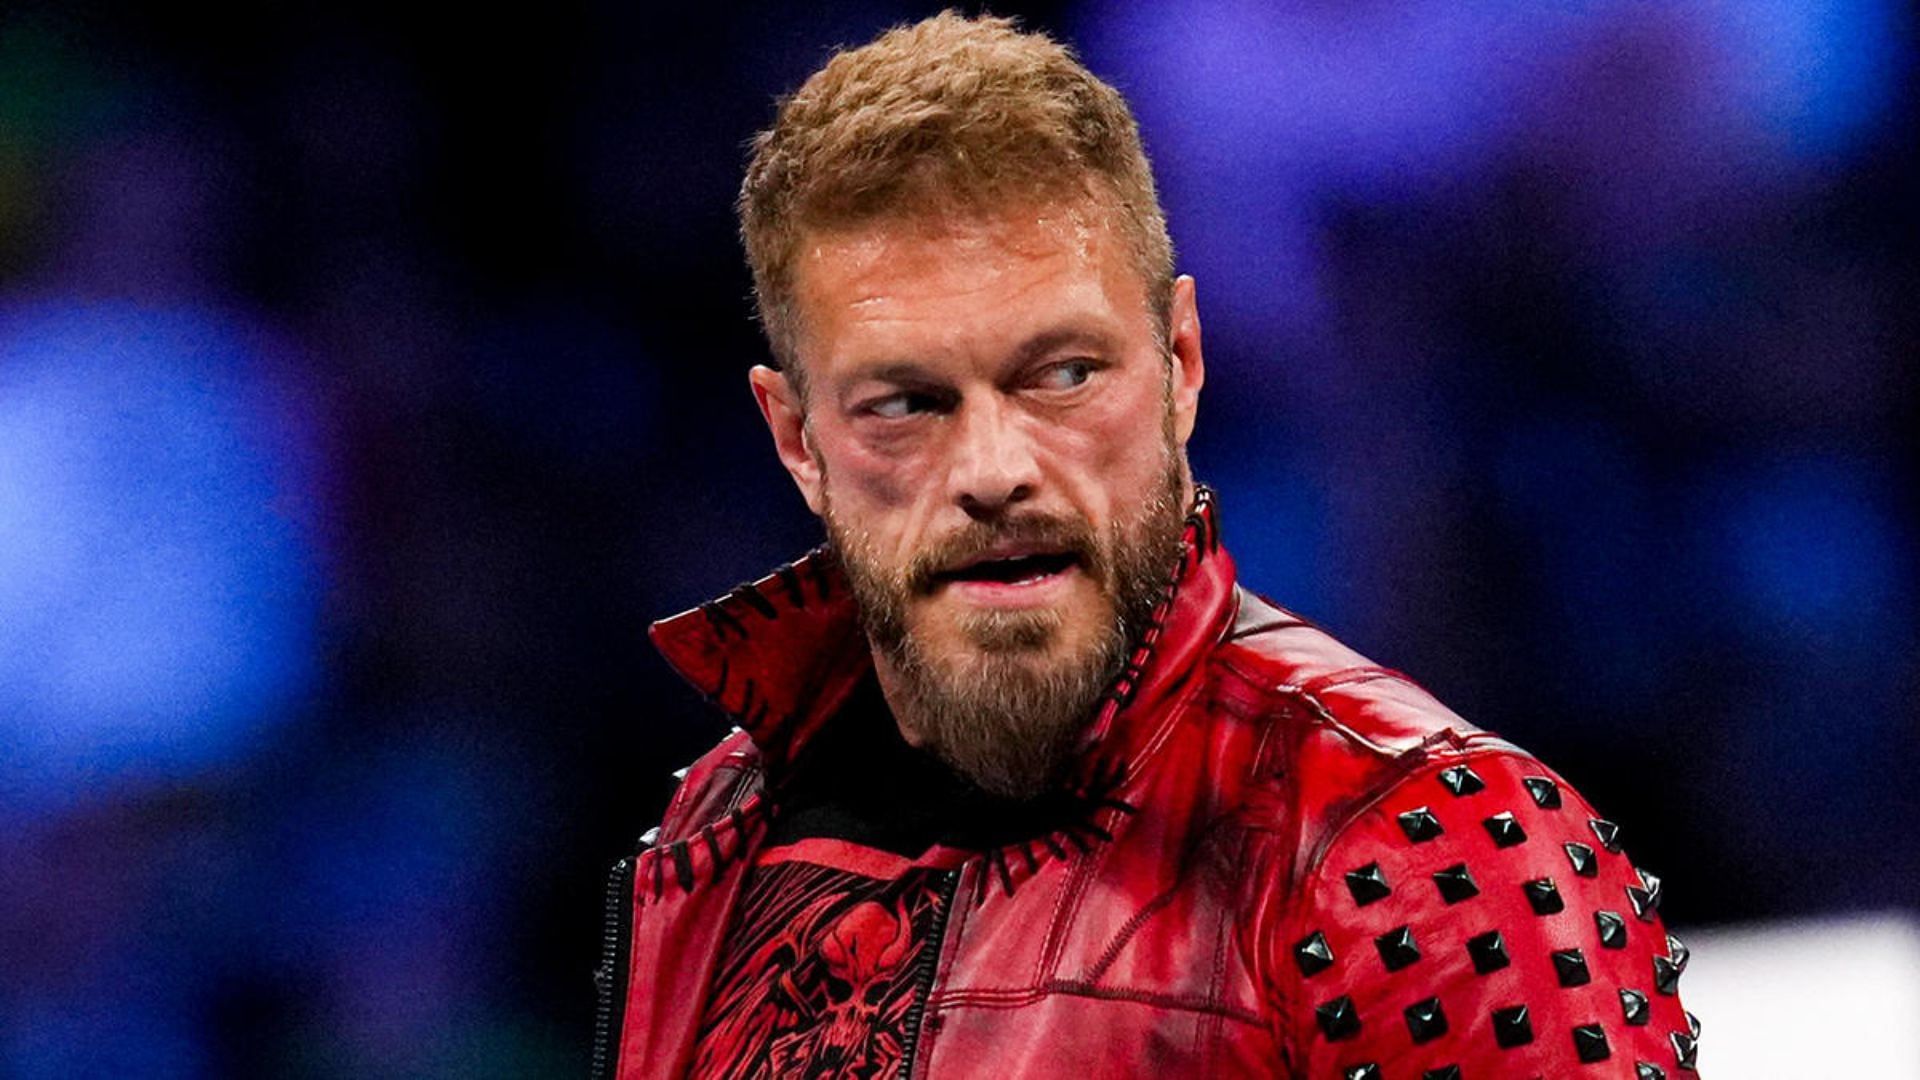 Edge in WWE. Image Credits: wwe.com 